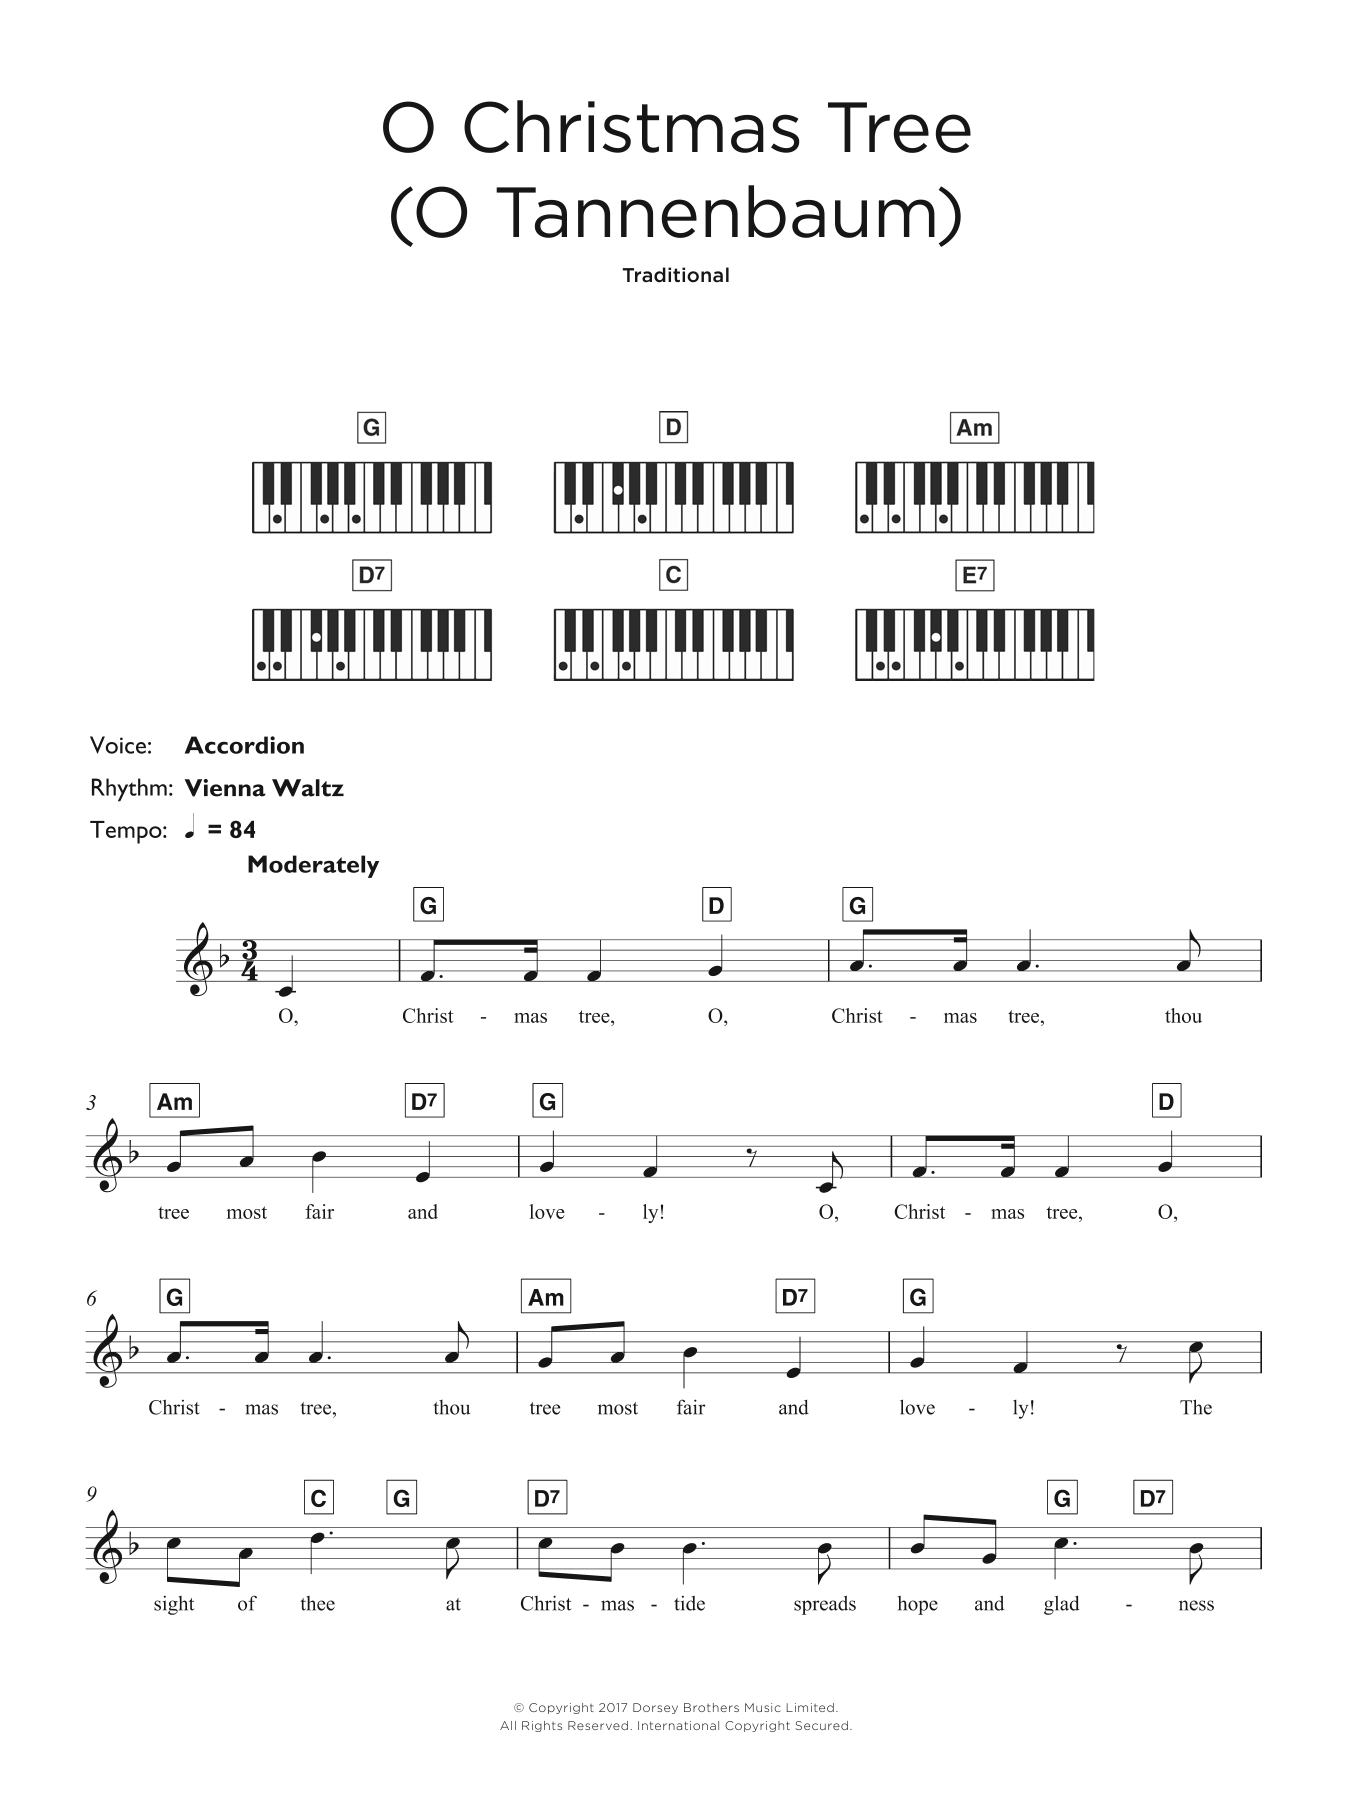 Christmas Carol O Christmas Tree (O Tannenbaum) sheet music notes and chords arranged for Guitar Chords/Lyrics